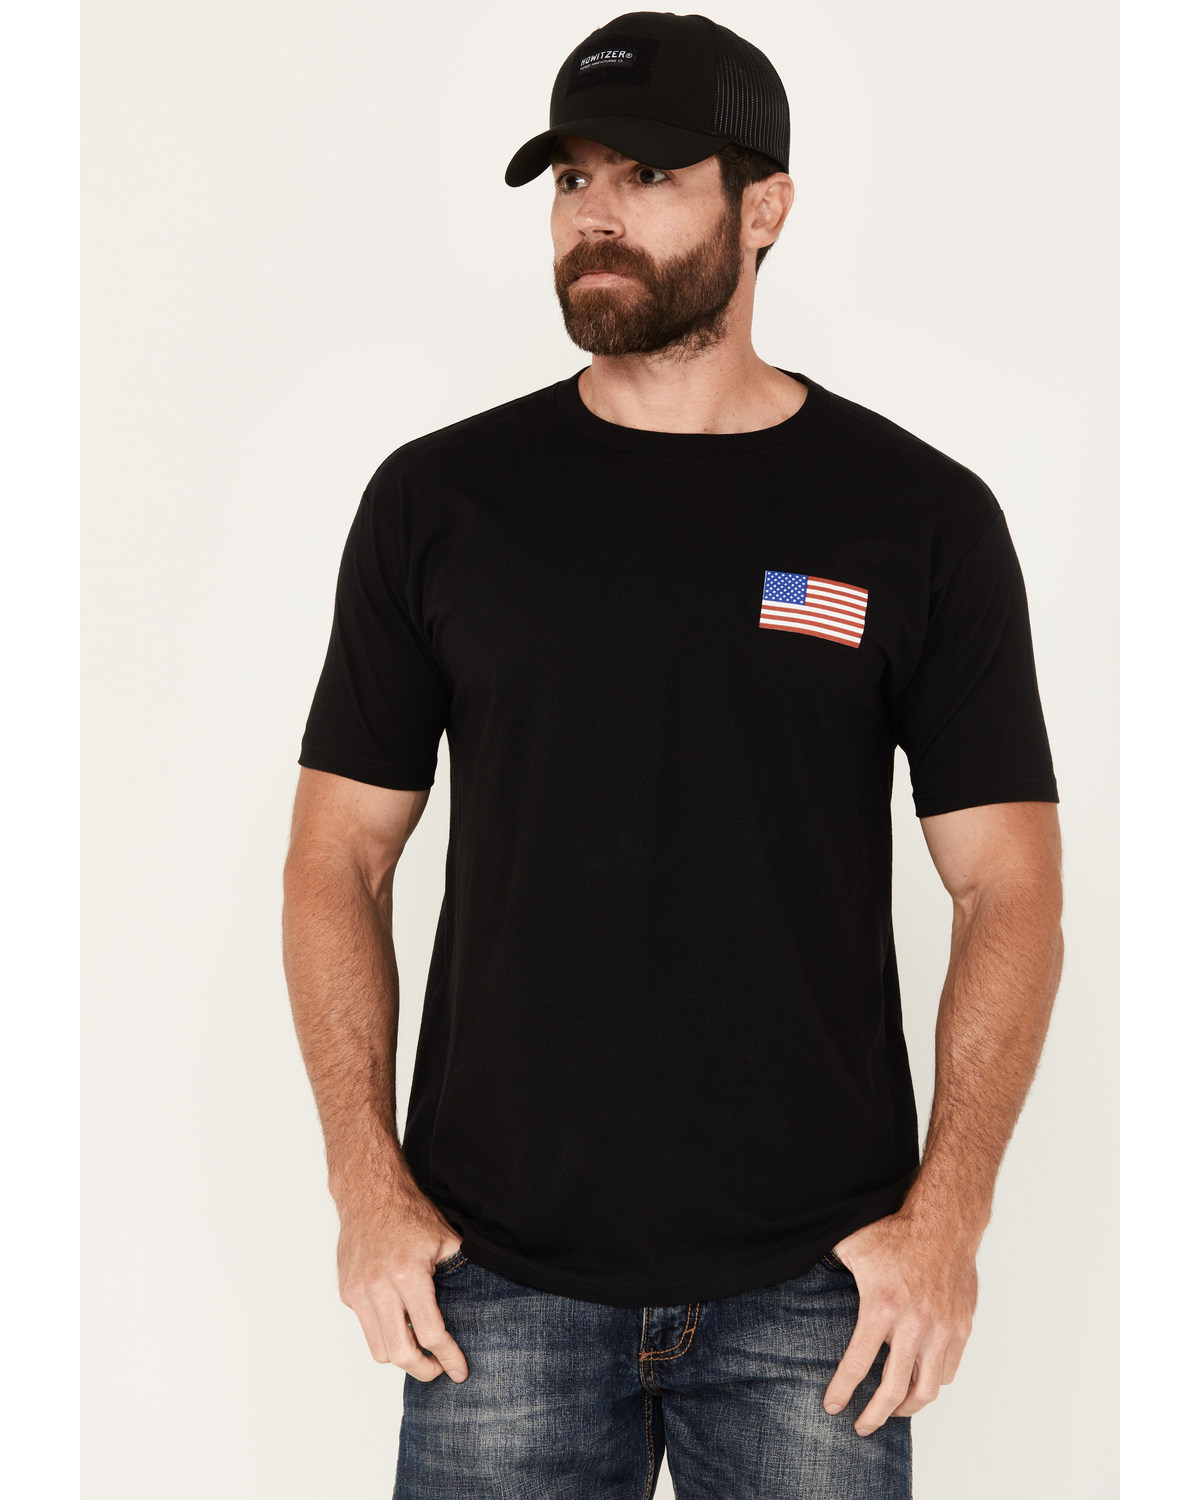 Howitzer Men's Patriot Defender Short Sleeve Graphic T-Shirt